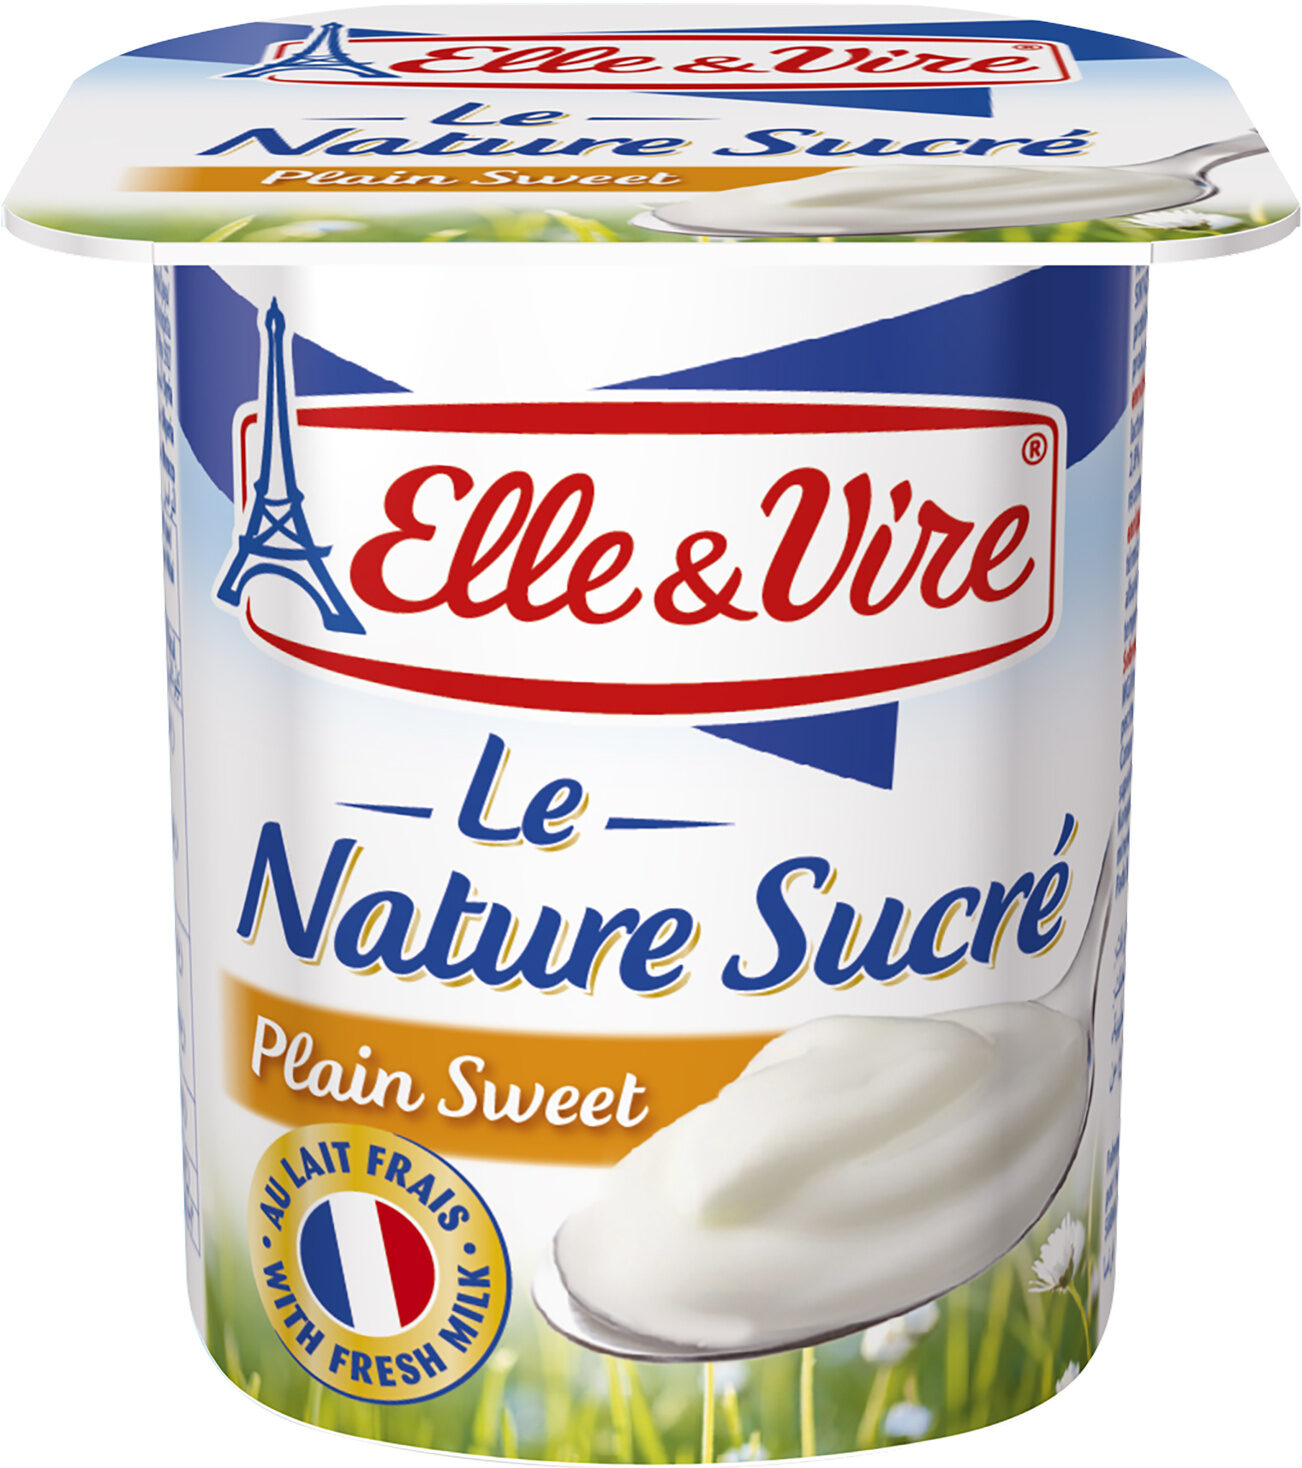 Elle &vire Yogurt Plain - Product - fr